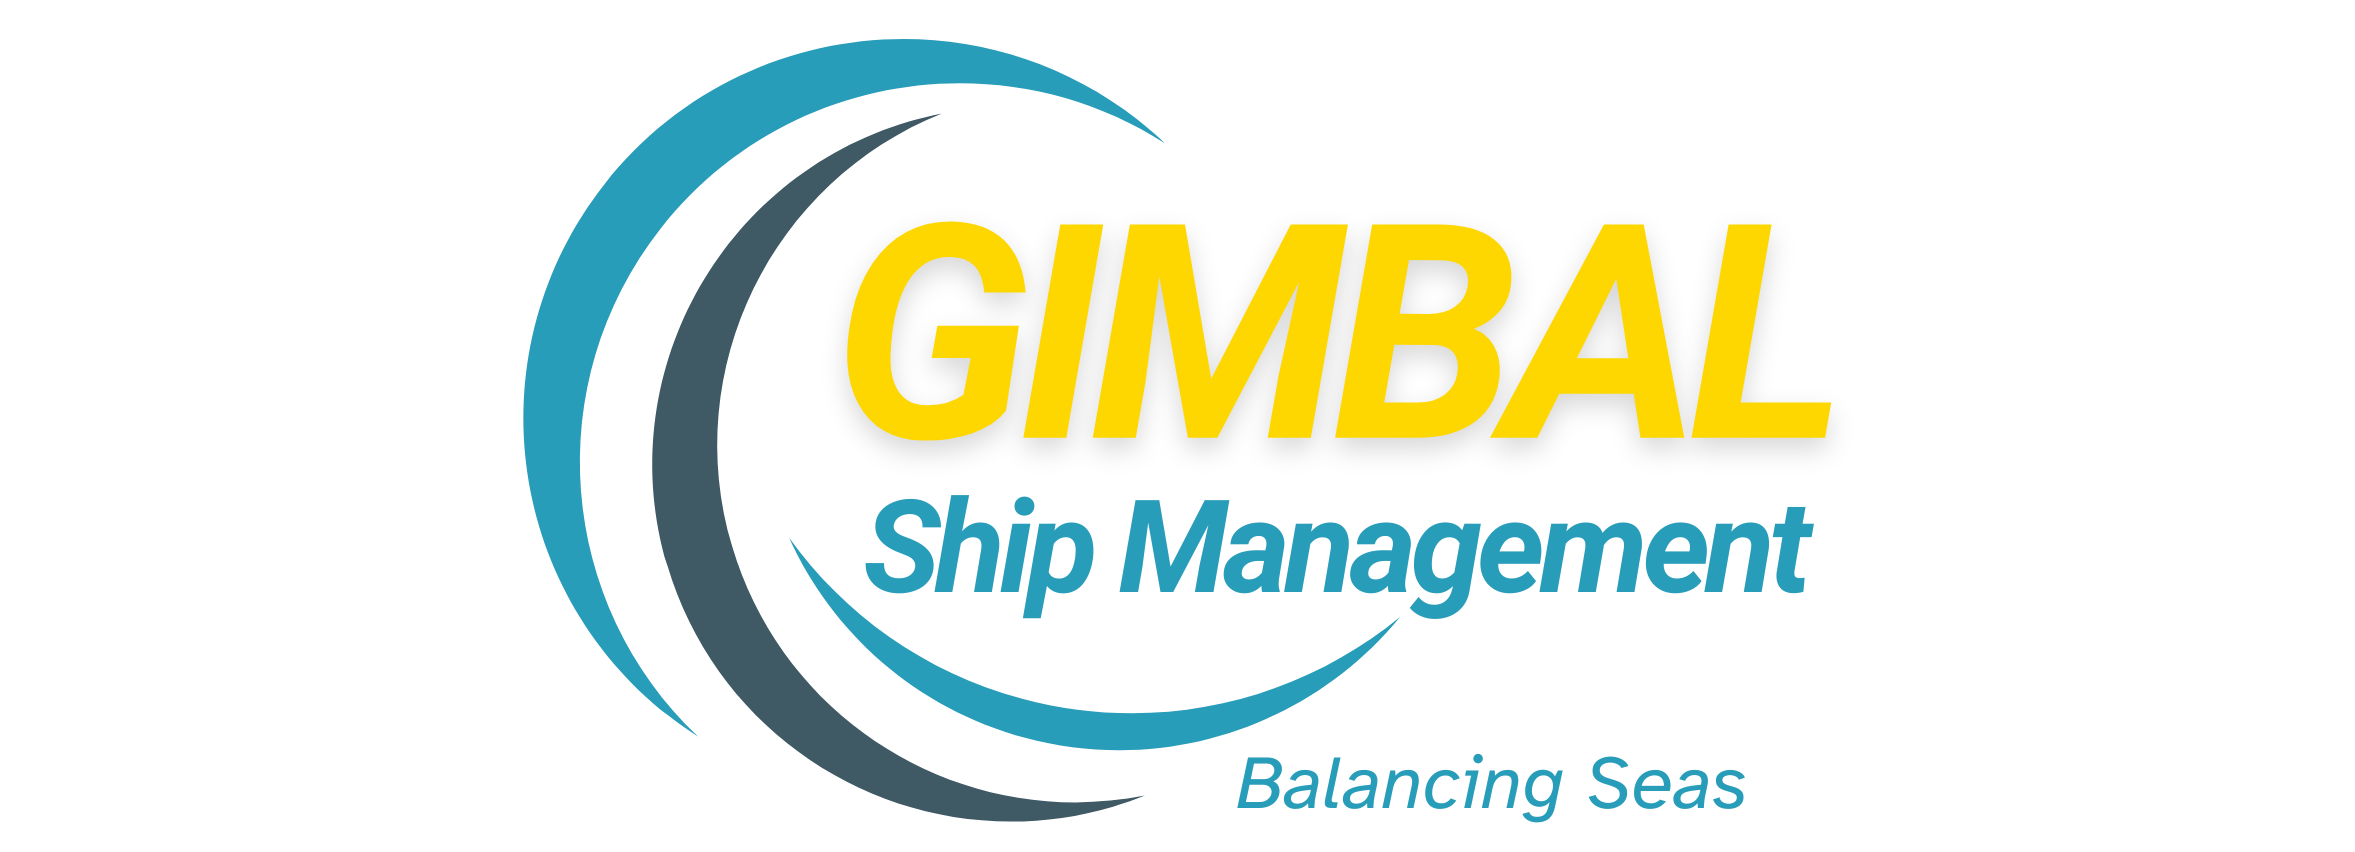 Gimbal Ship Management LLC | Ship Management Company in Dubai, UAE